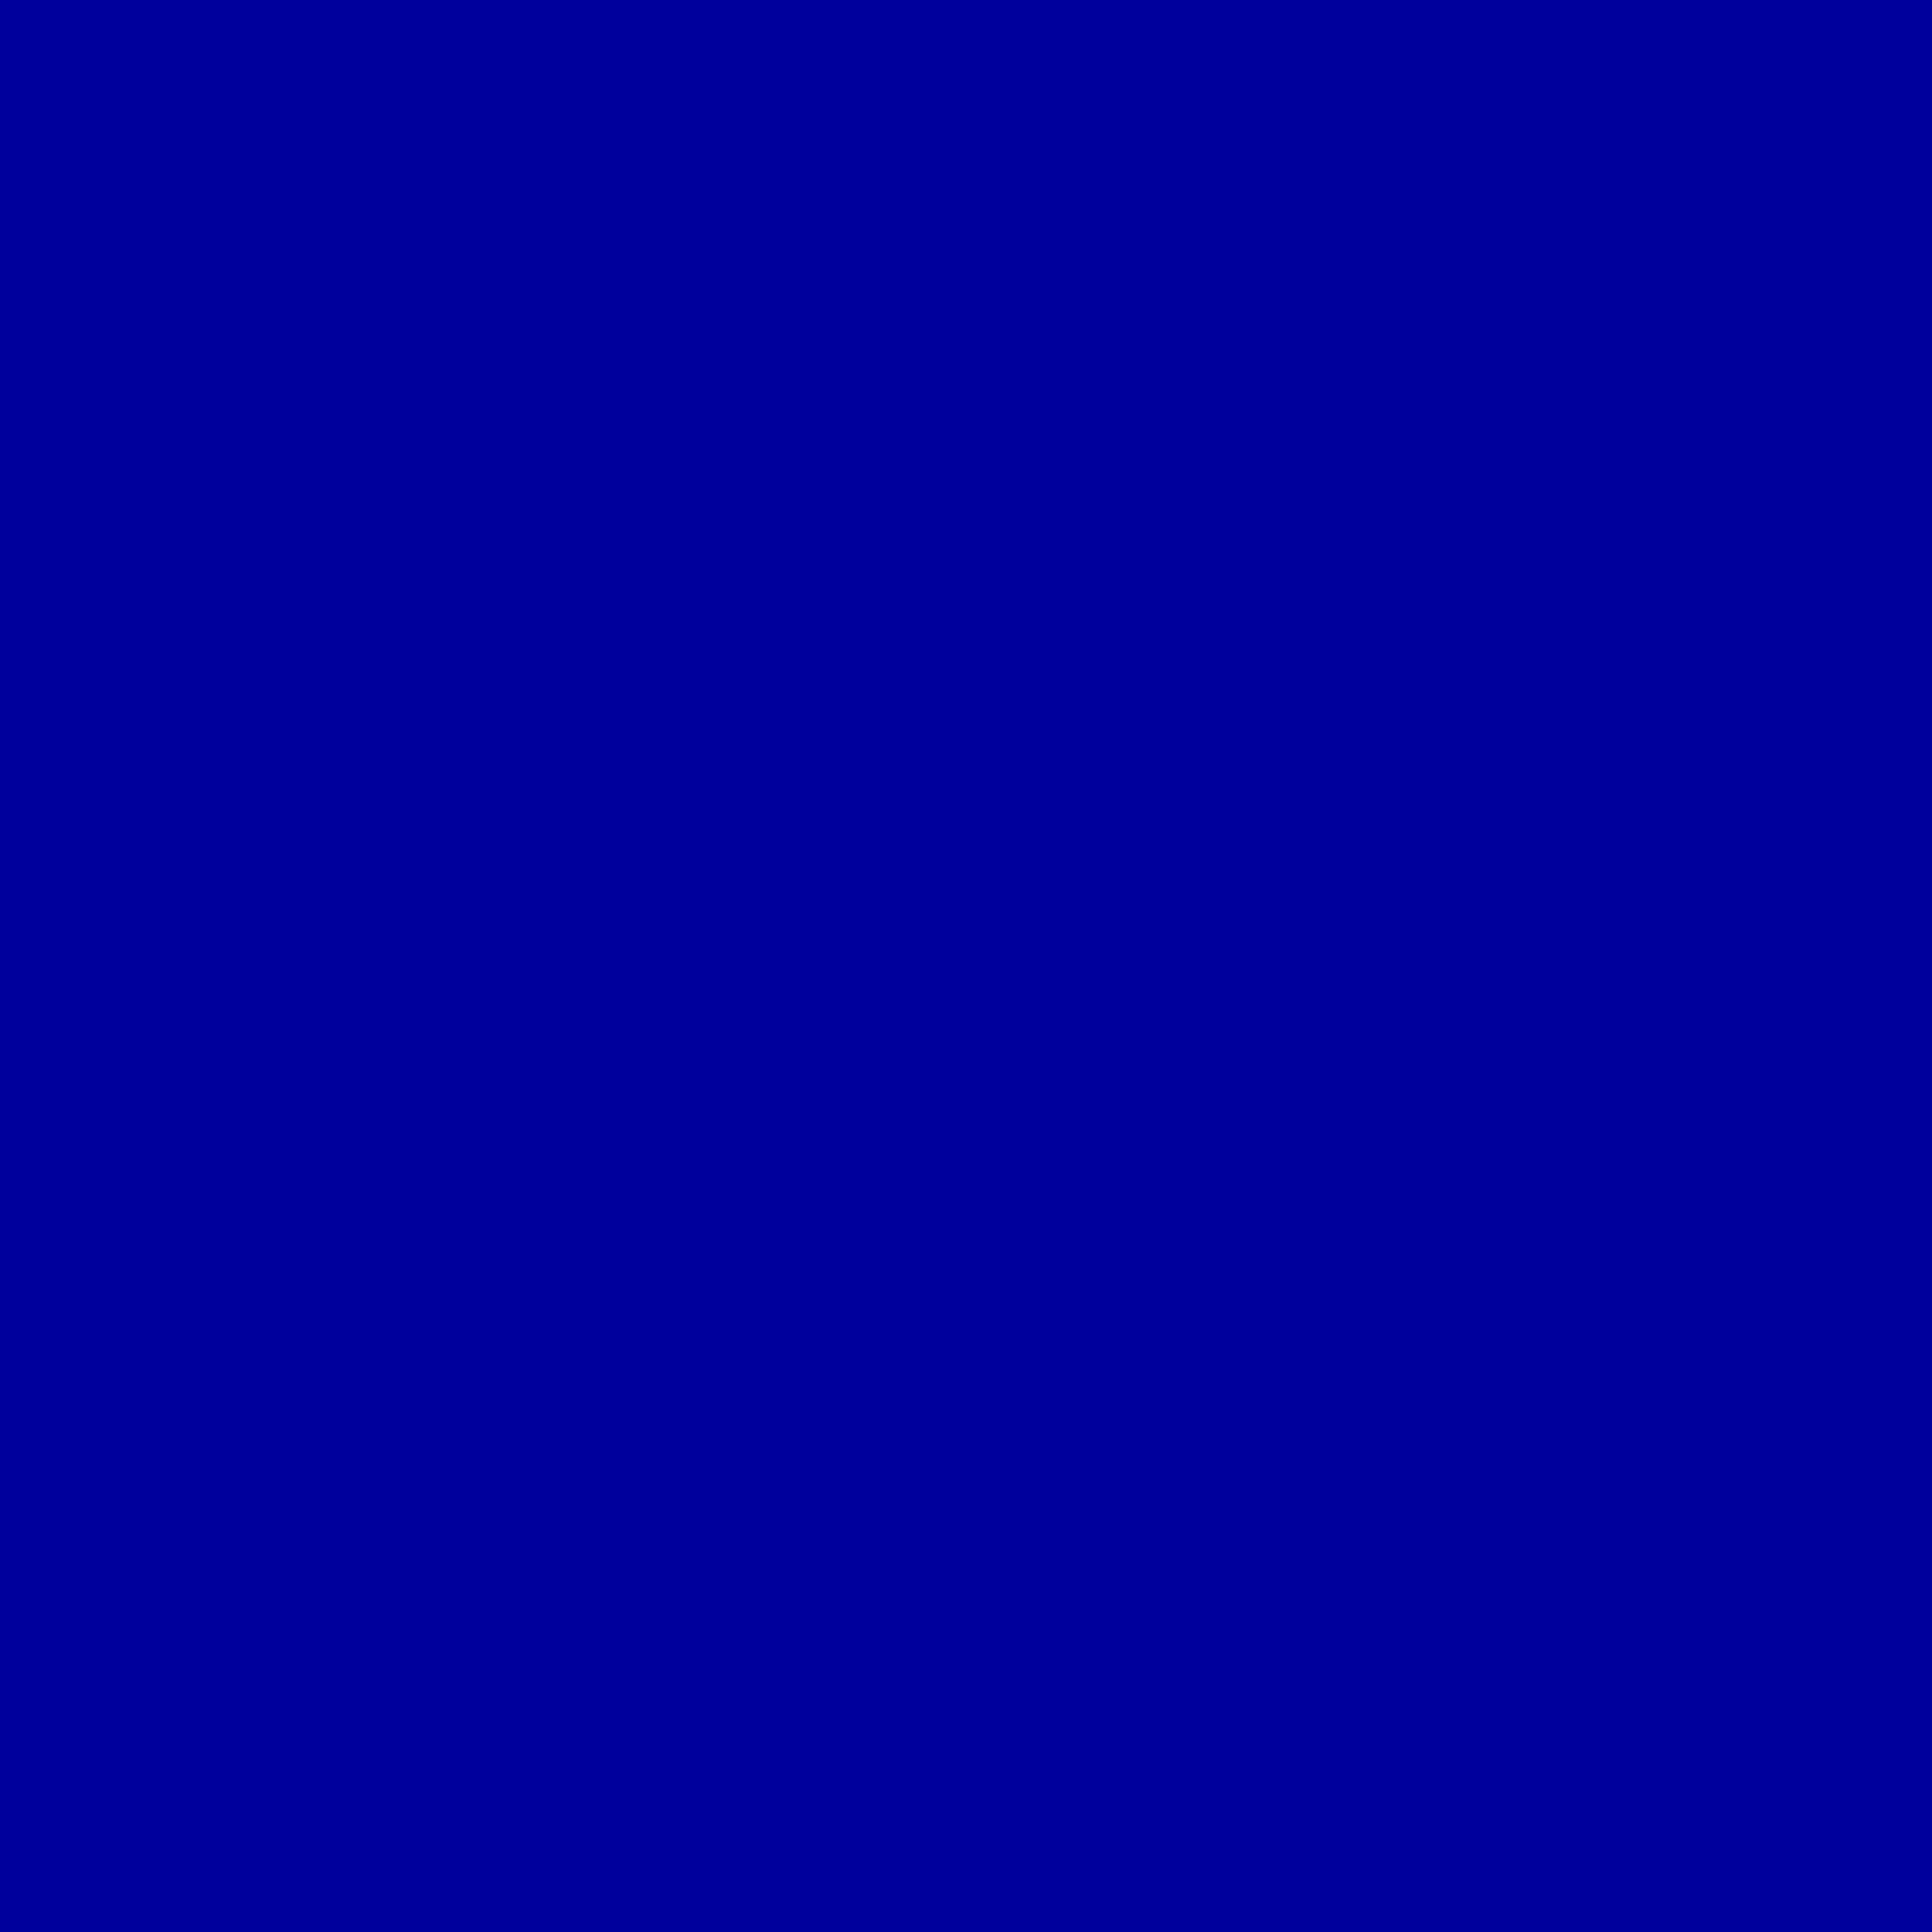 2732x2732 Duke Blue Solid Color Background